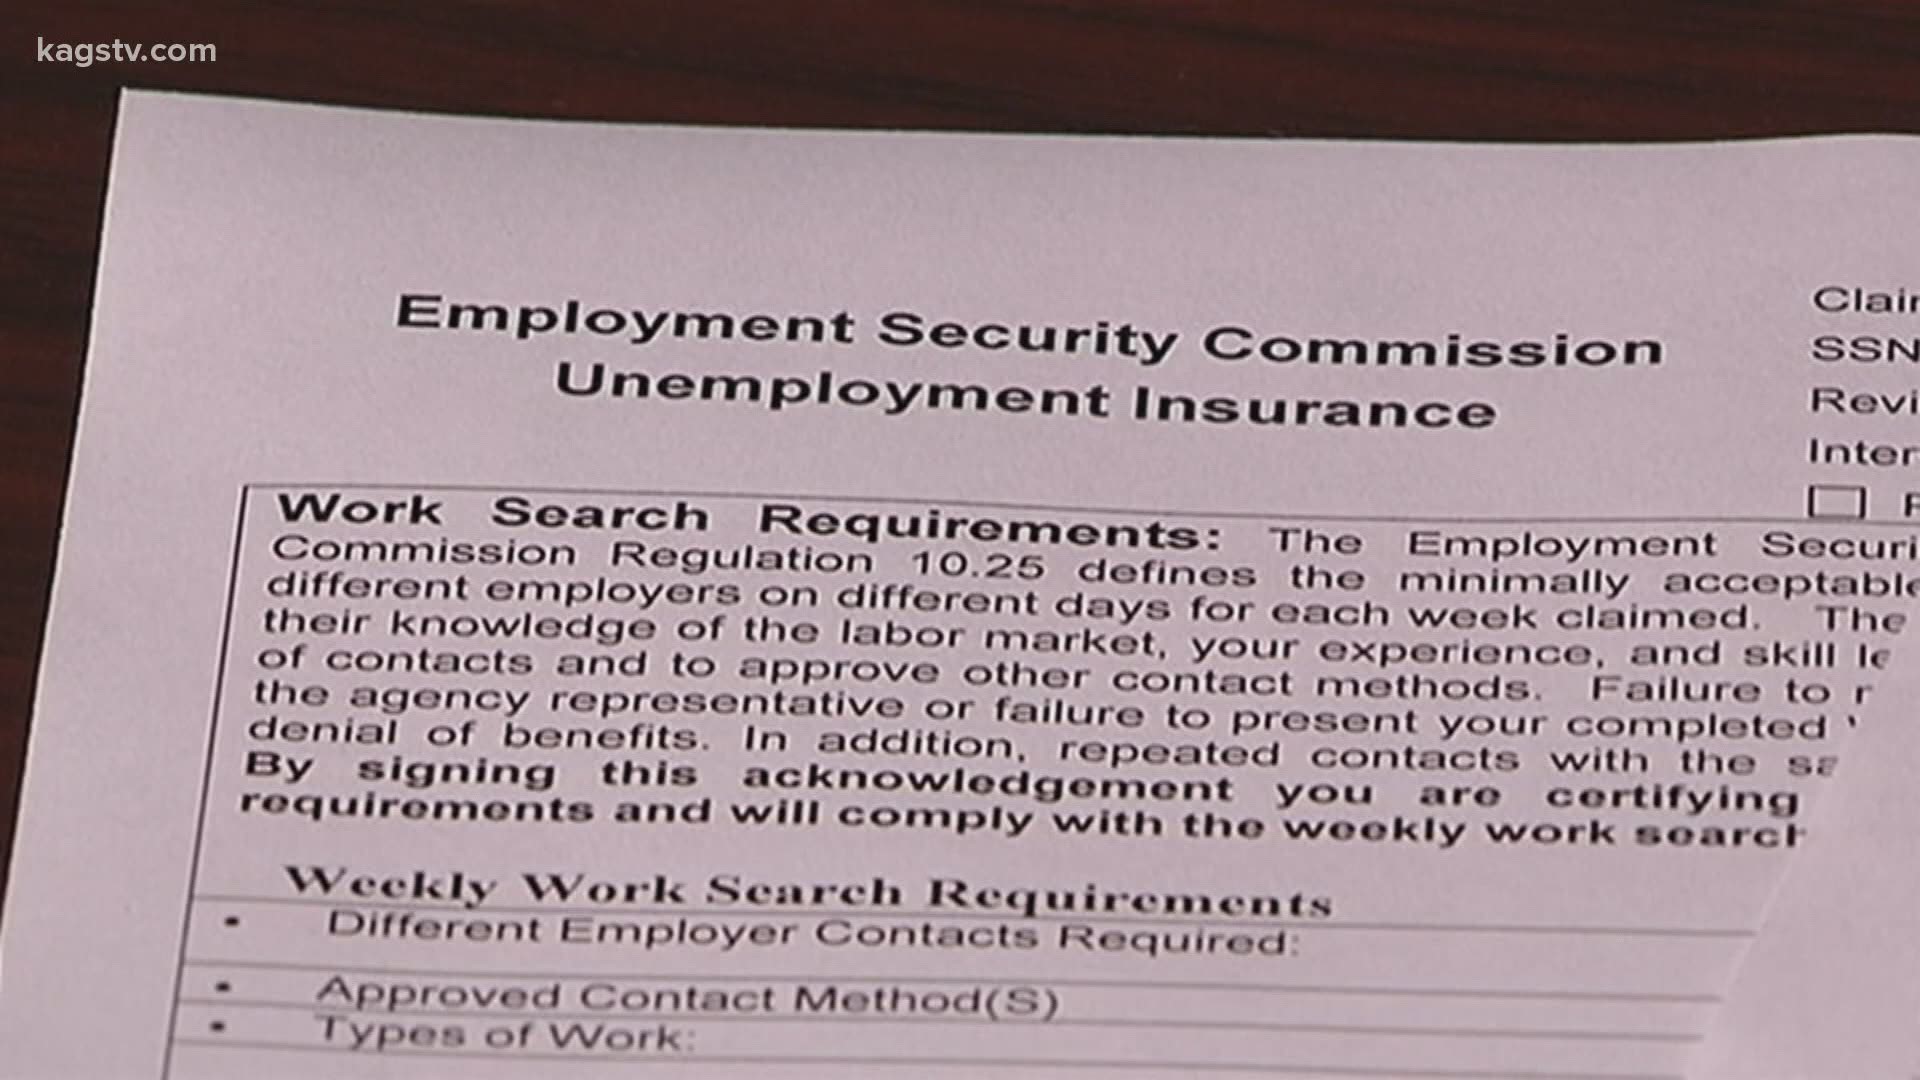 Unemployment benefits ends soon, what next?